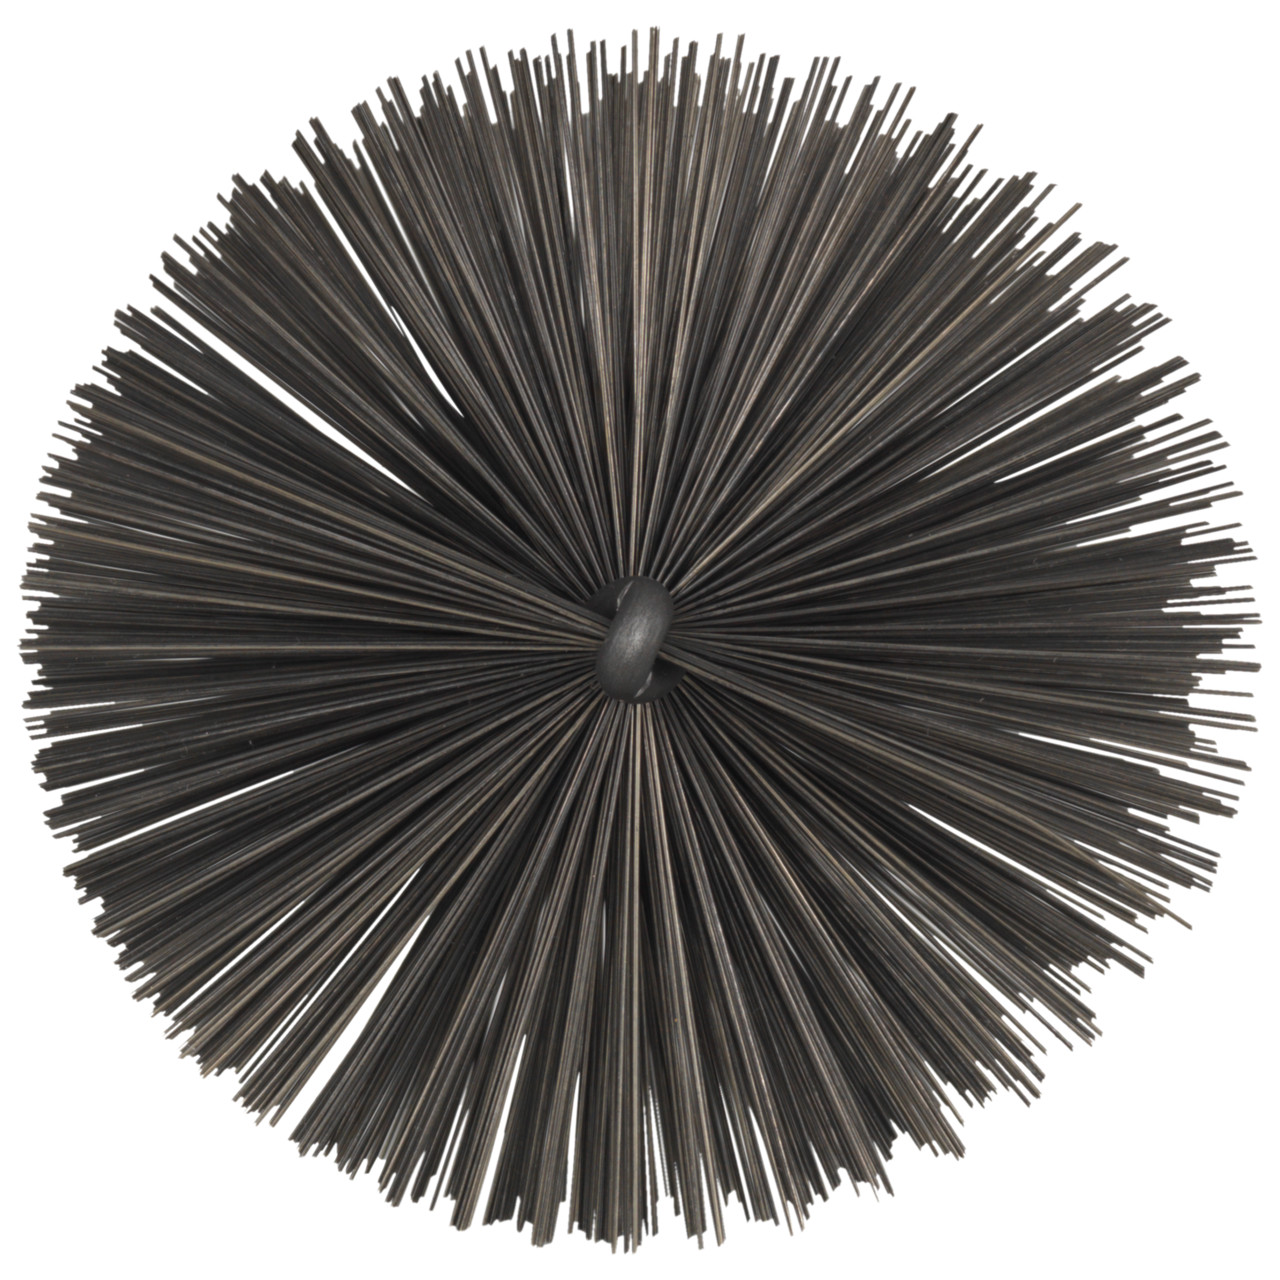 Tyrolit Cepillo para tubos con rosca exterior DxGE-I 40xW1/2-160 Para acero, forma: 18ROGDG - (cepillo para tubos), Art. 34203603